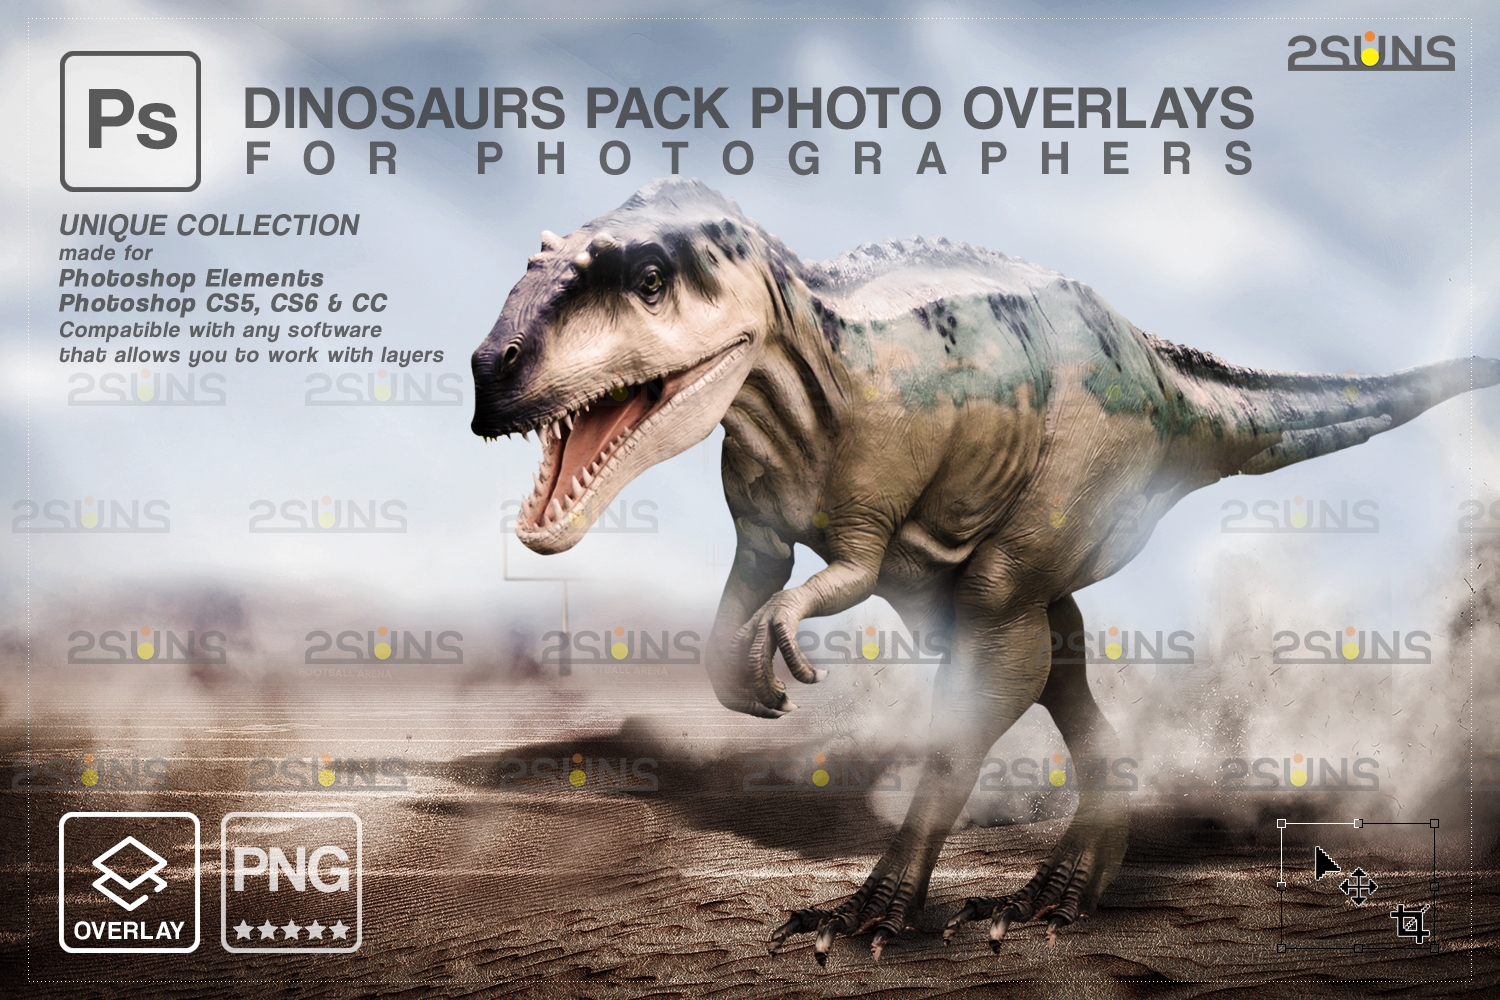 Dinosaurs, Dinosaur, png overlays photoshop by 2SUNS1 on DeviantArt